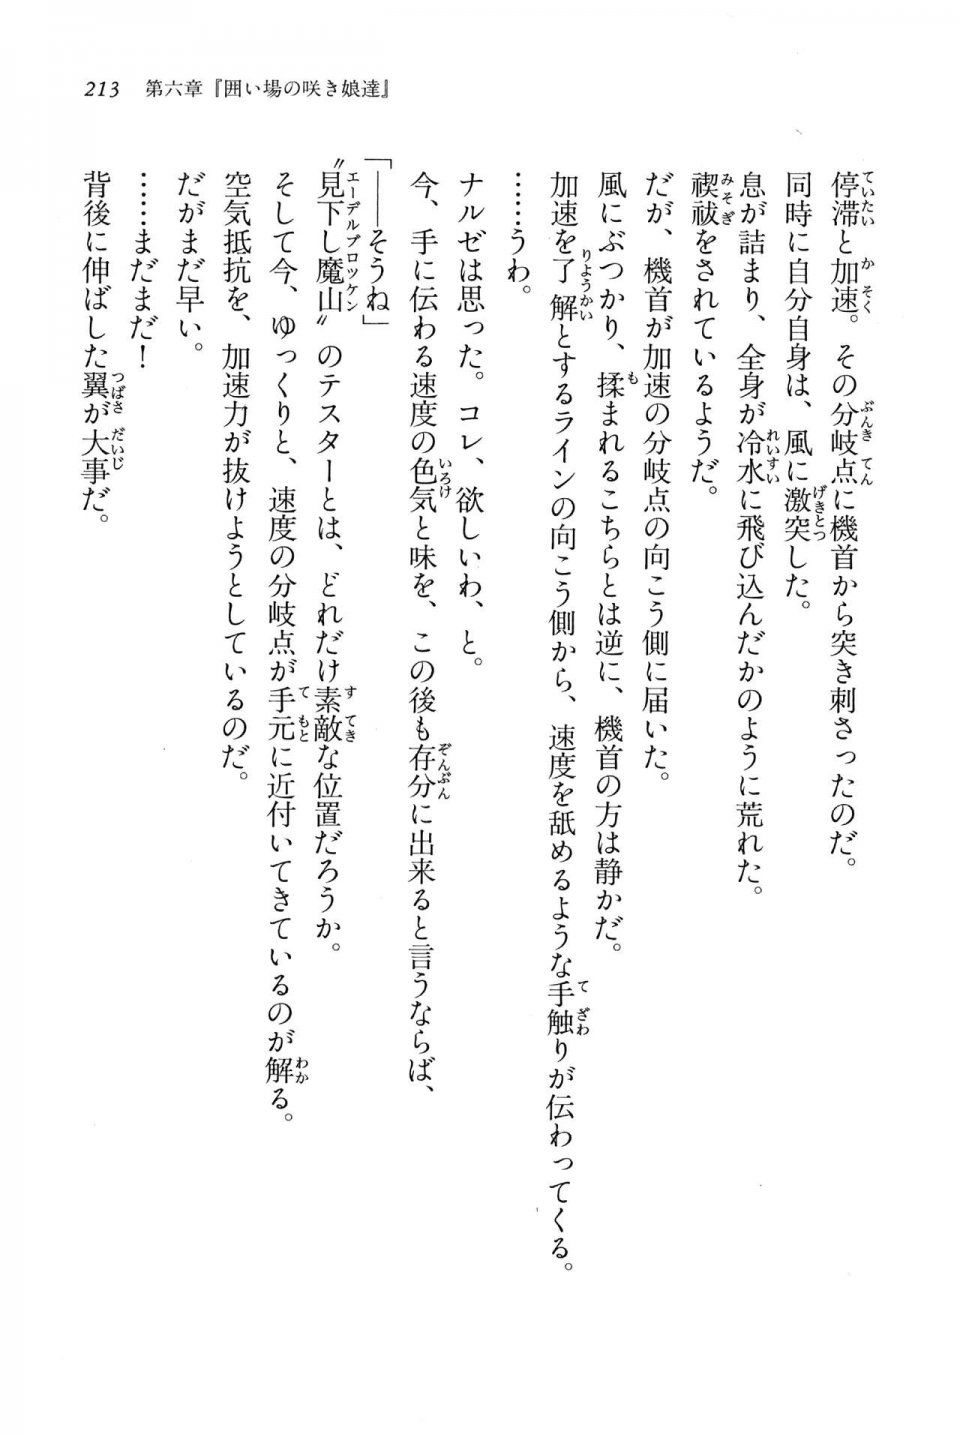 Kyoukai Senjou no Horizon BD Special Mininovel Vol 7(4A) - Photo #217